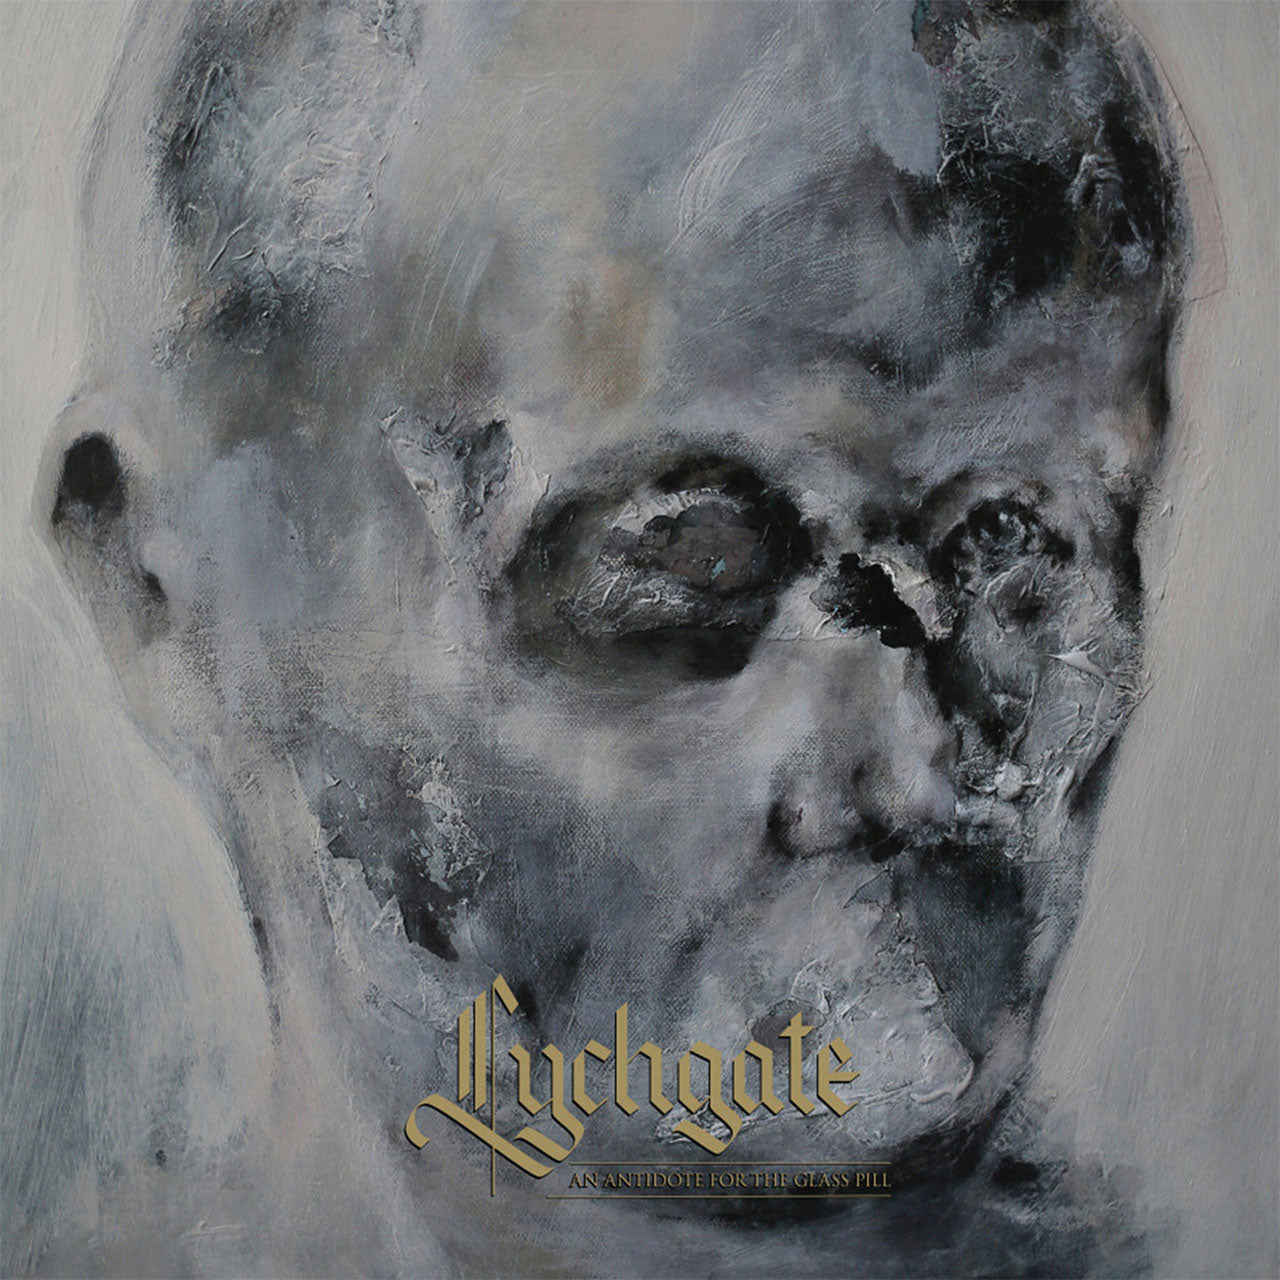 Lychgate - An Antidote for the Glass Pill (Digipak CD)